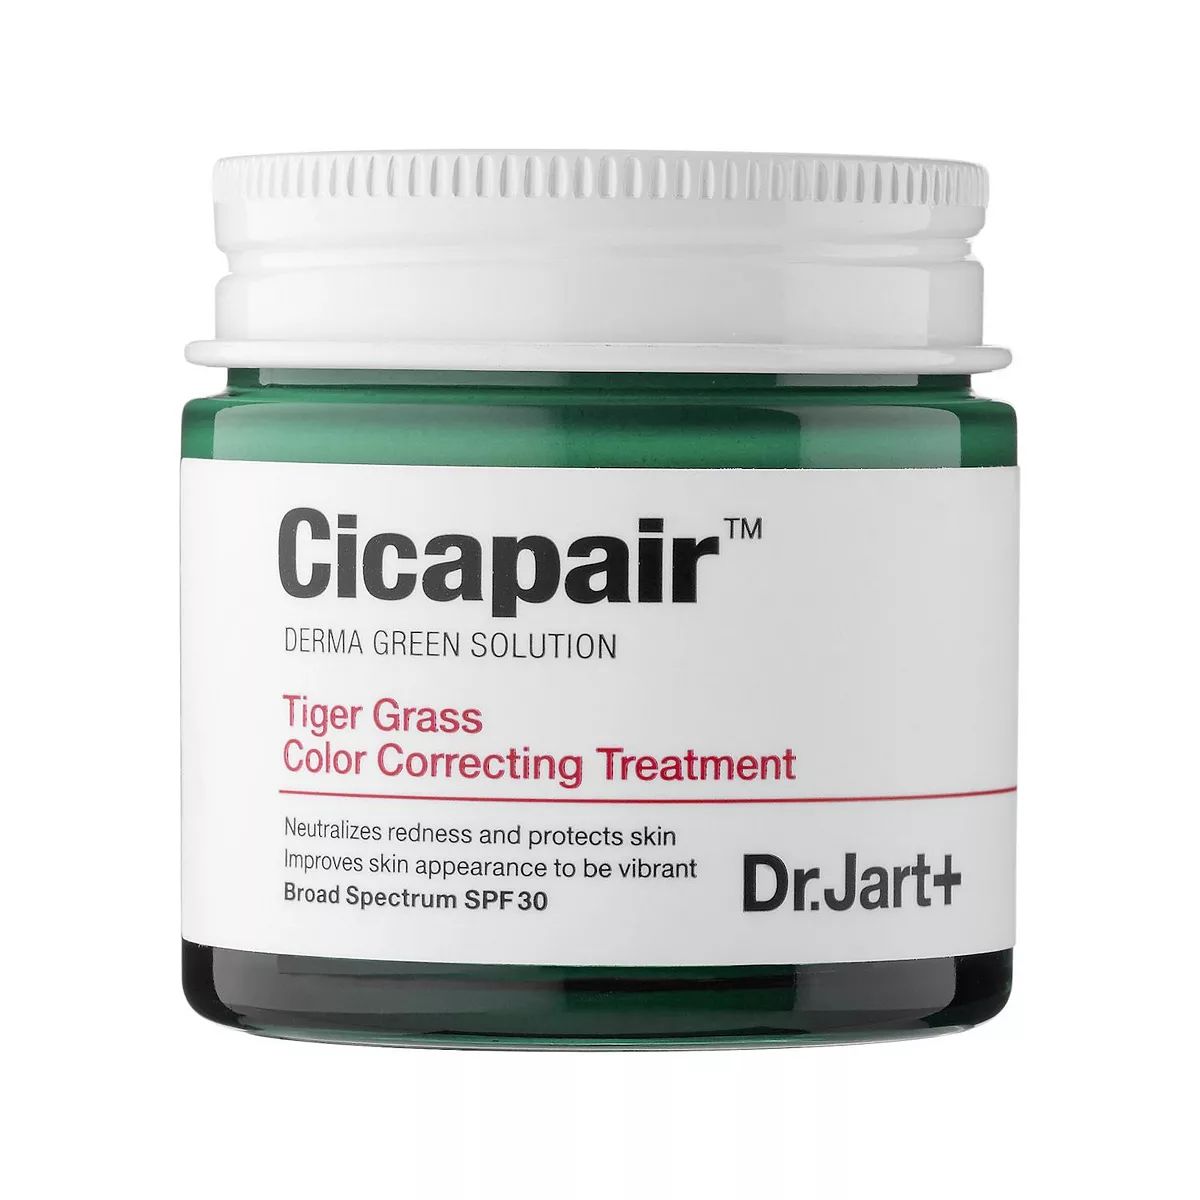 Dr. Jart Cicapair Tiger Grass Color Correcting Treatment SPF 30 | Kohl's